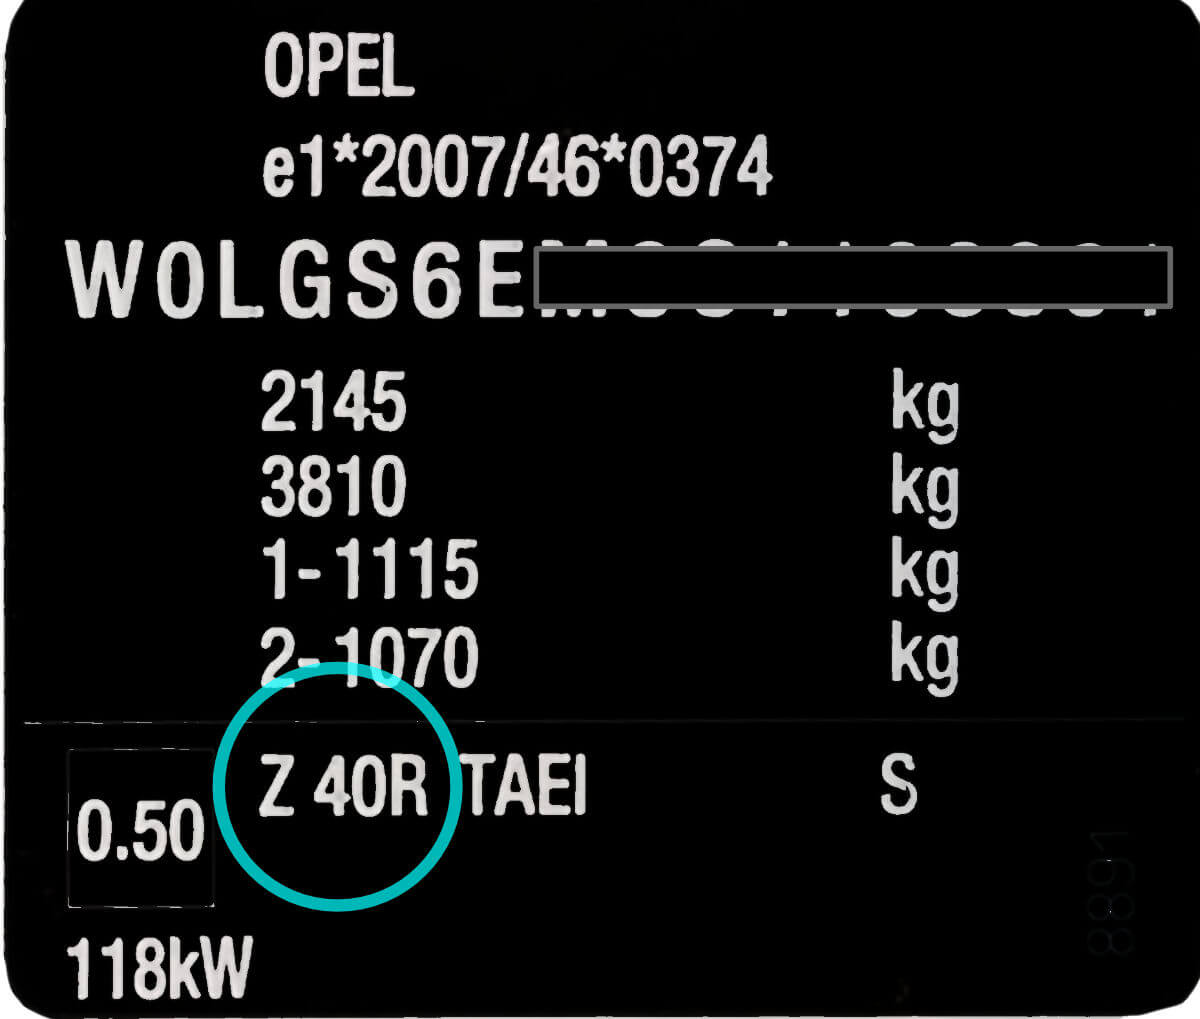 Opel Farbcodes finden – Große Tabelle - AUTO MOTOR ÖL